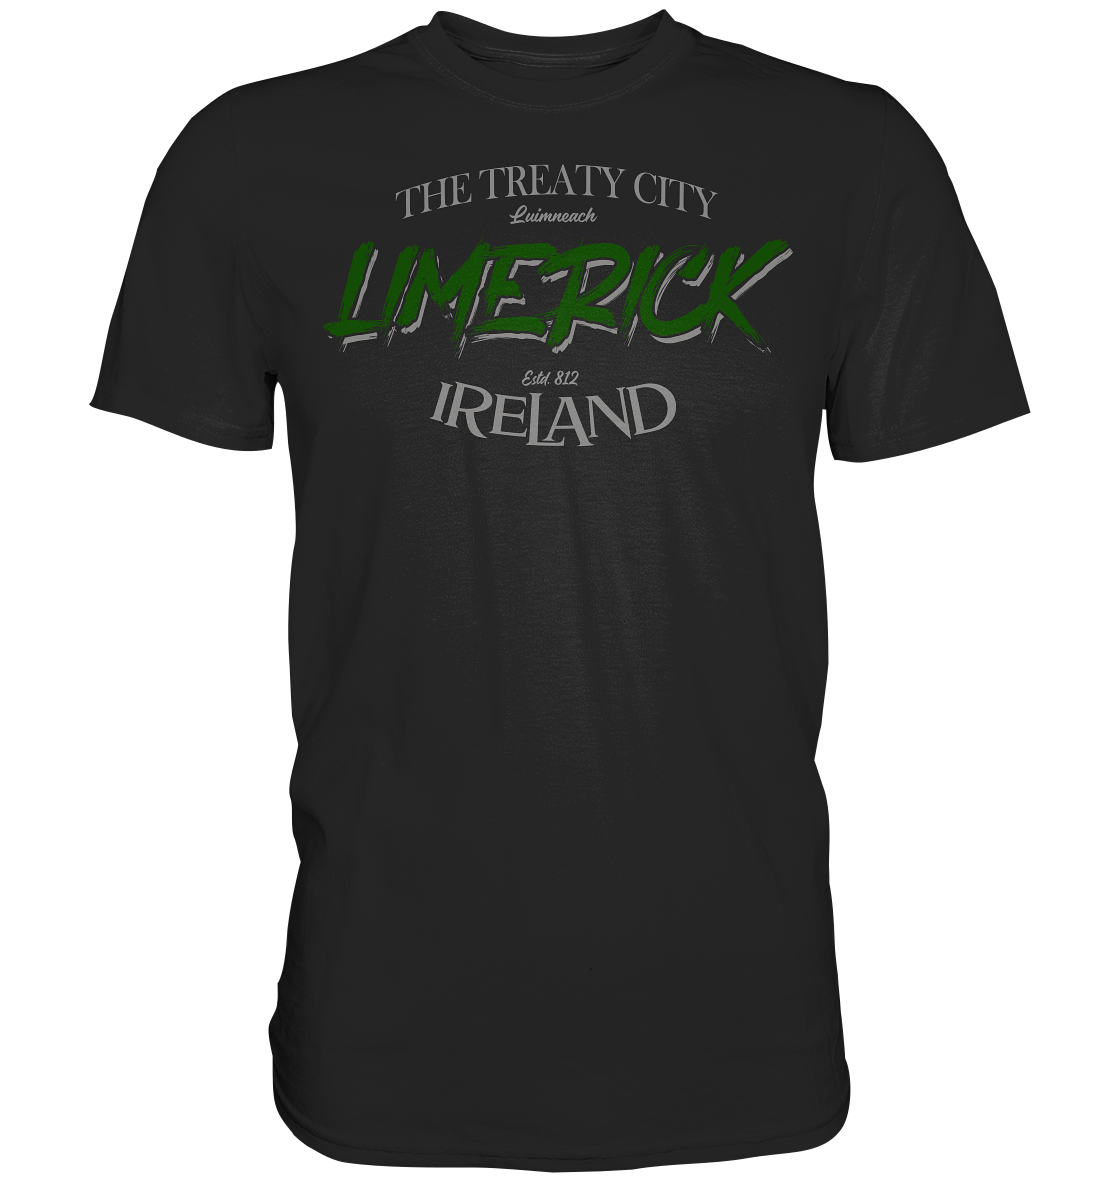 Limerick "The Treaty City" - Premium Shirt